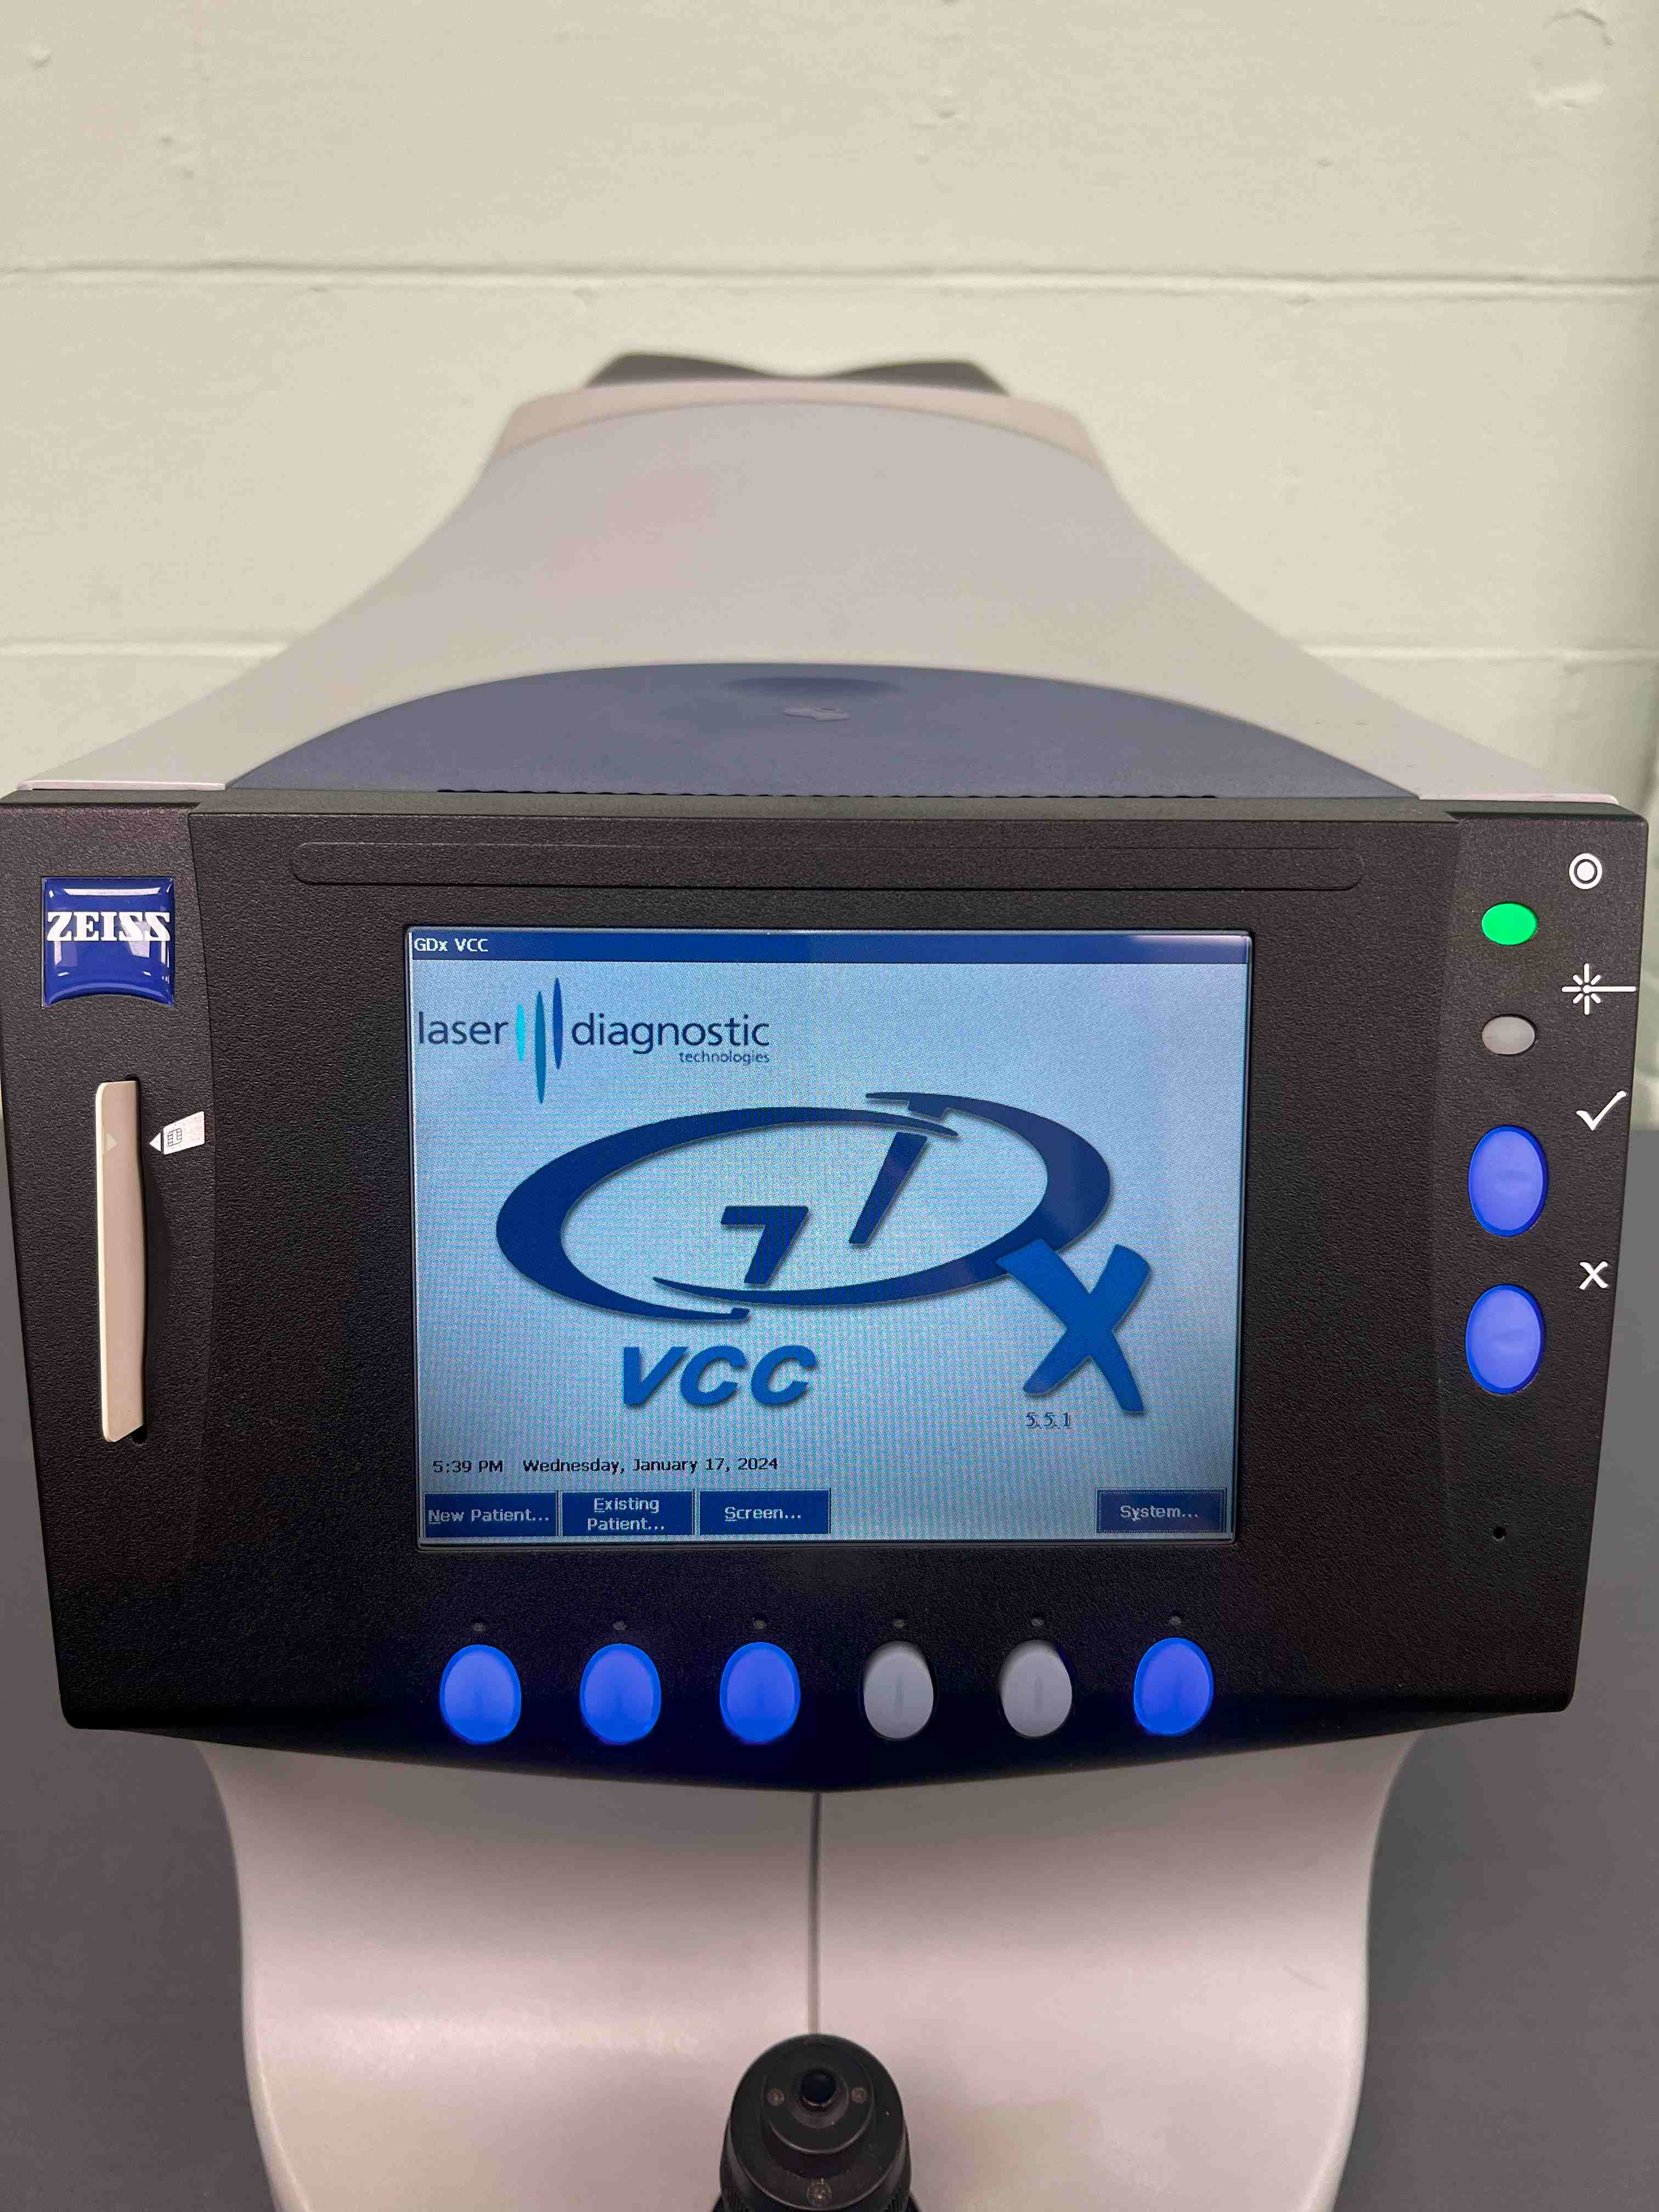 Zeiss GDx VCC Scanning Laser Diagnostic Technologies Polarimeter